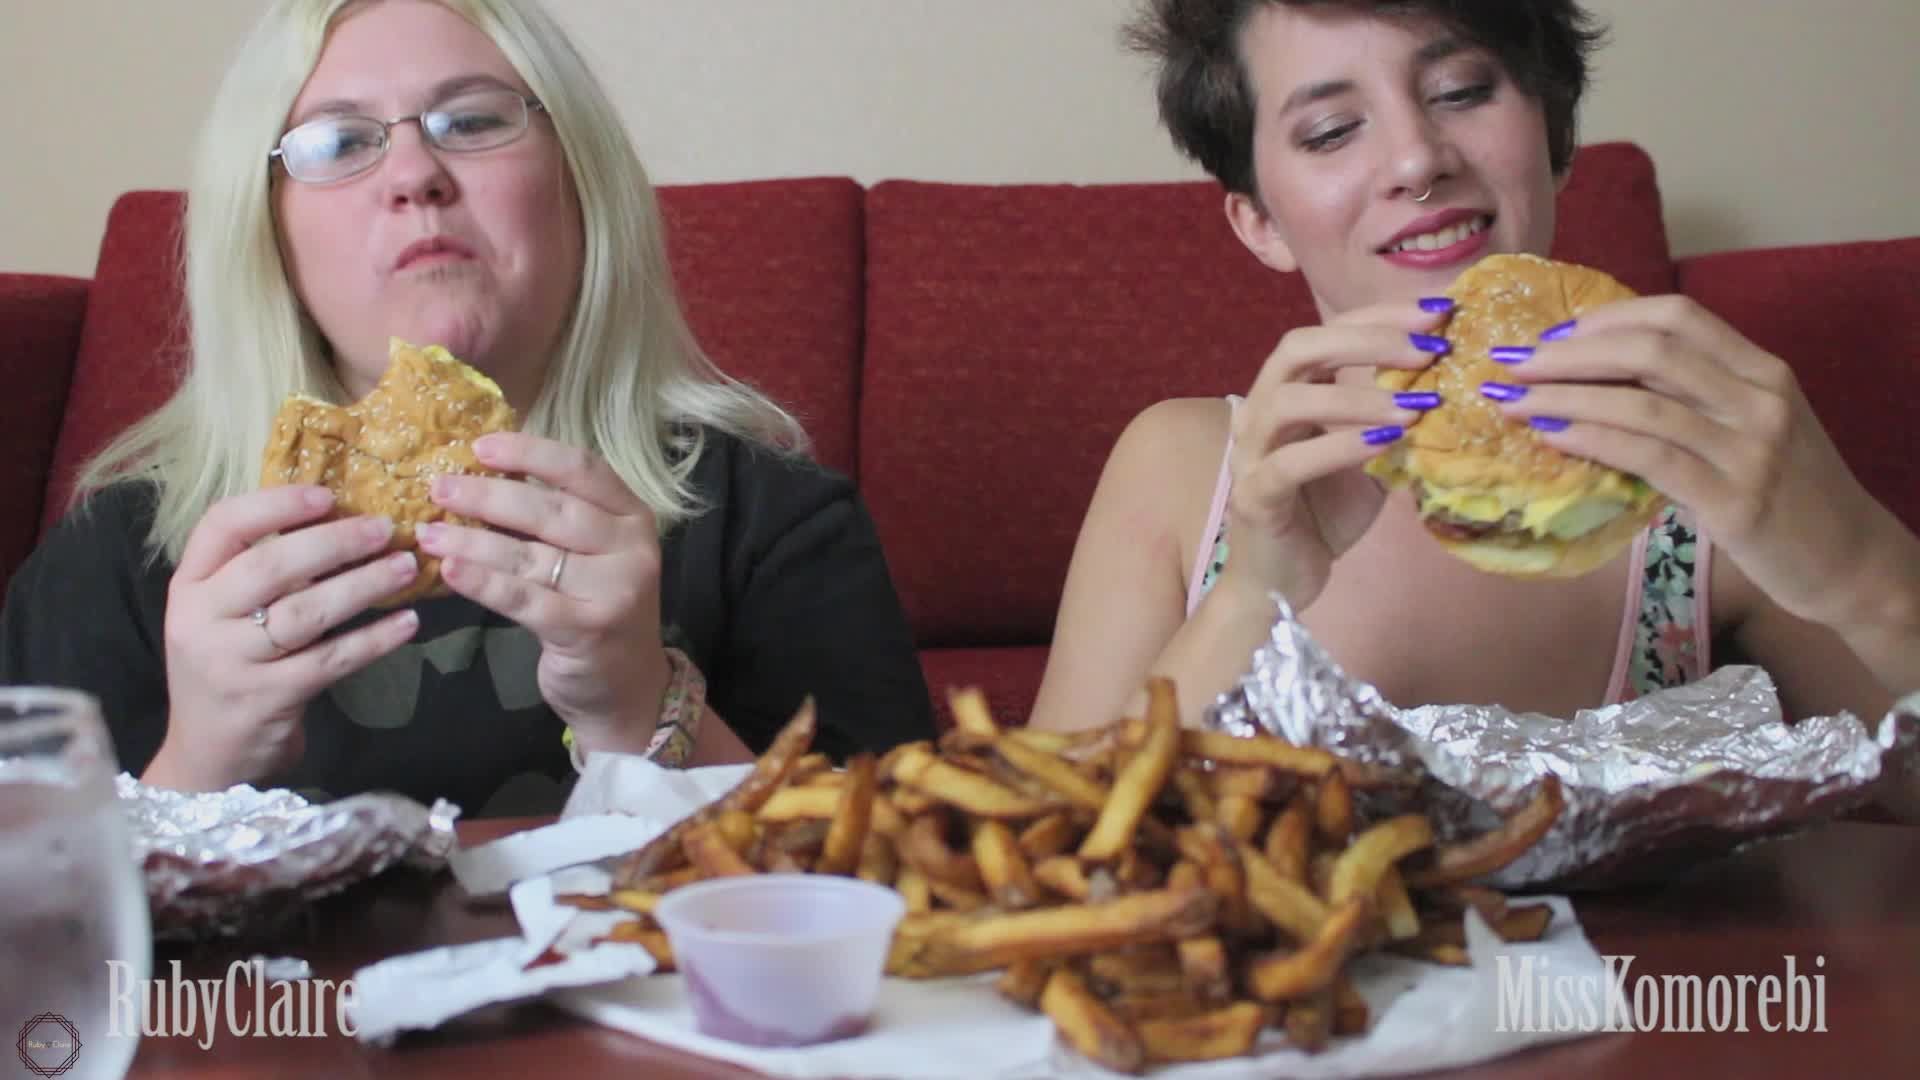 Eating Burgers &amp; Fries with Miss Komoreb